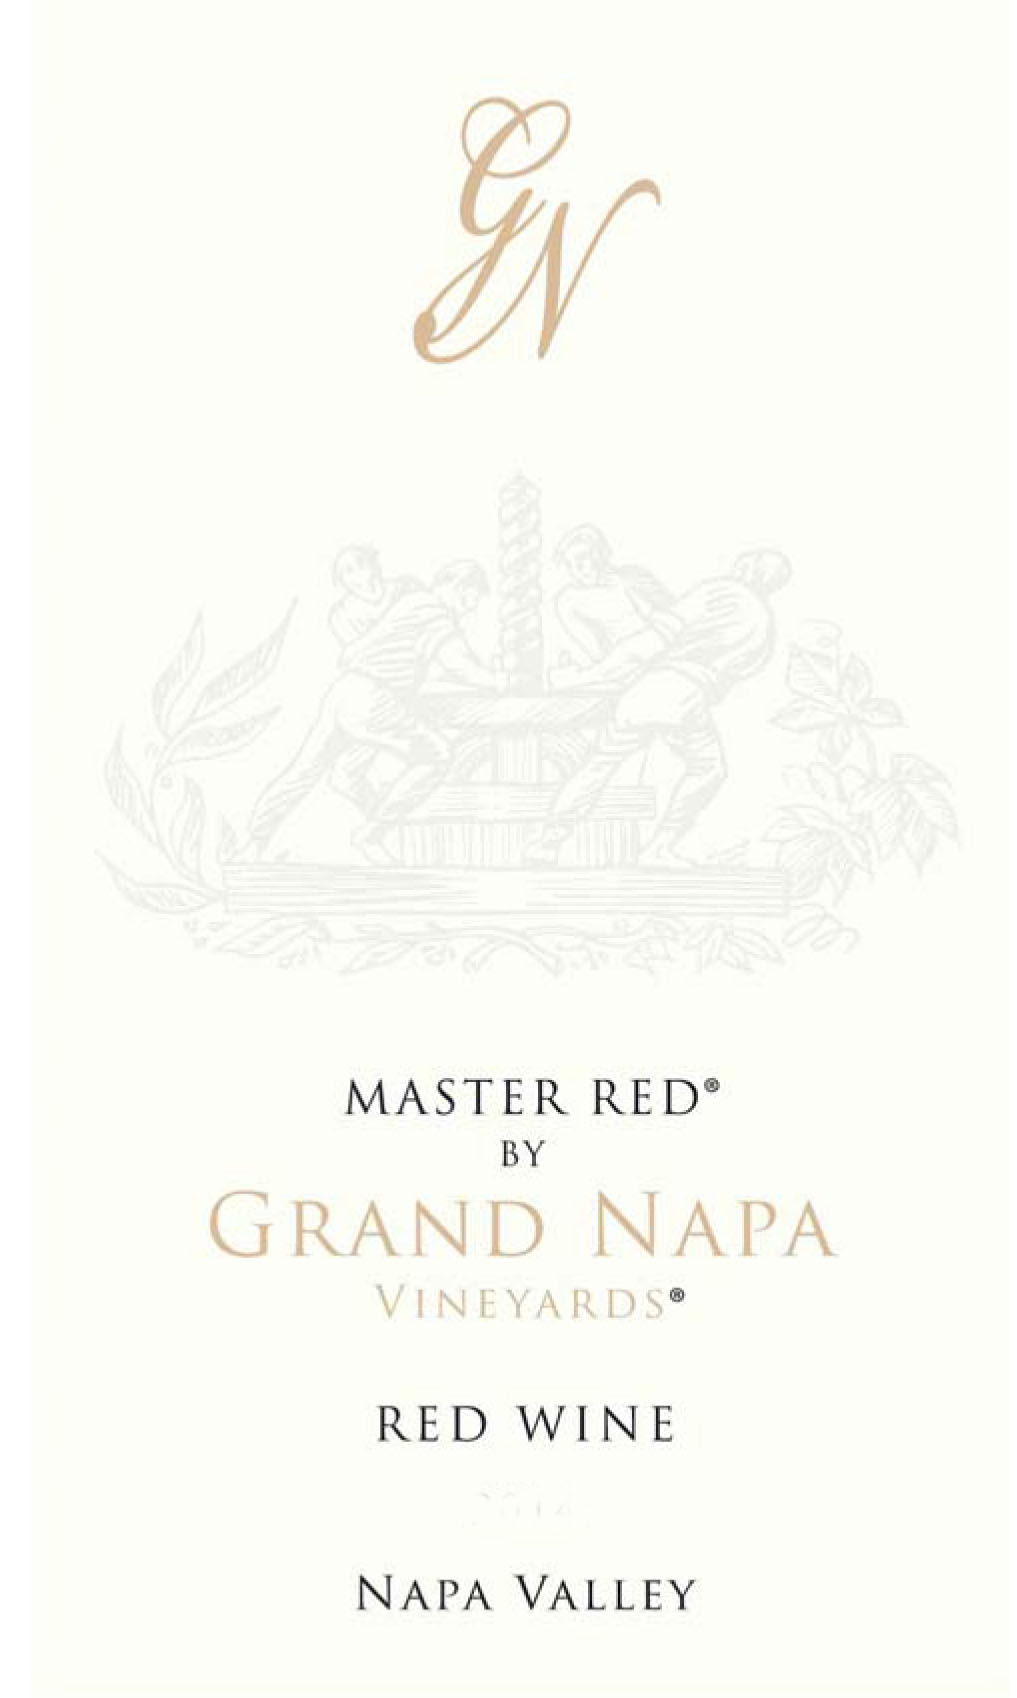 Grand Napa Vineyards - Red Wine Master Red label